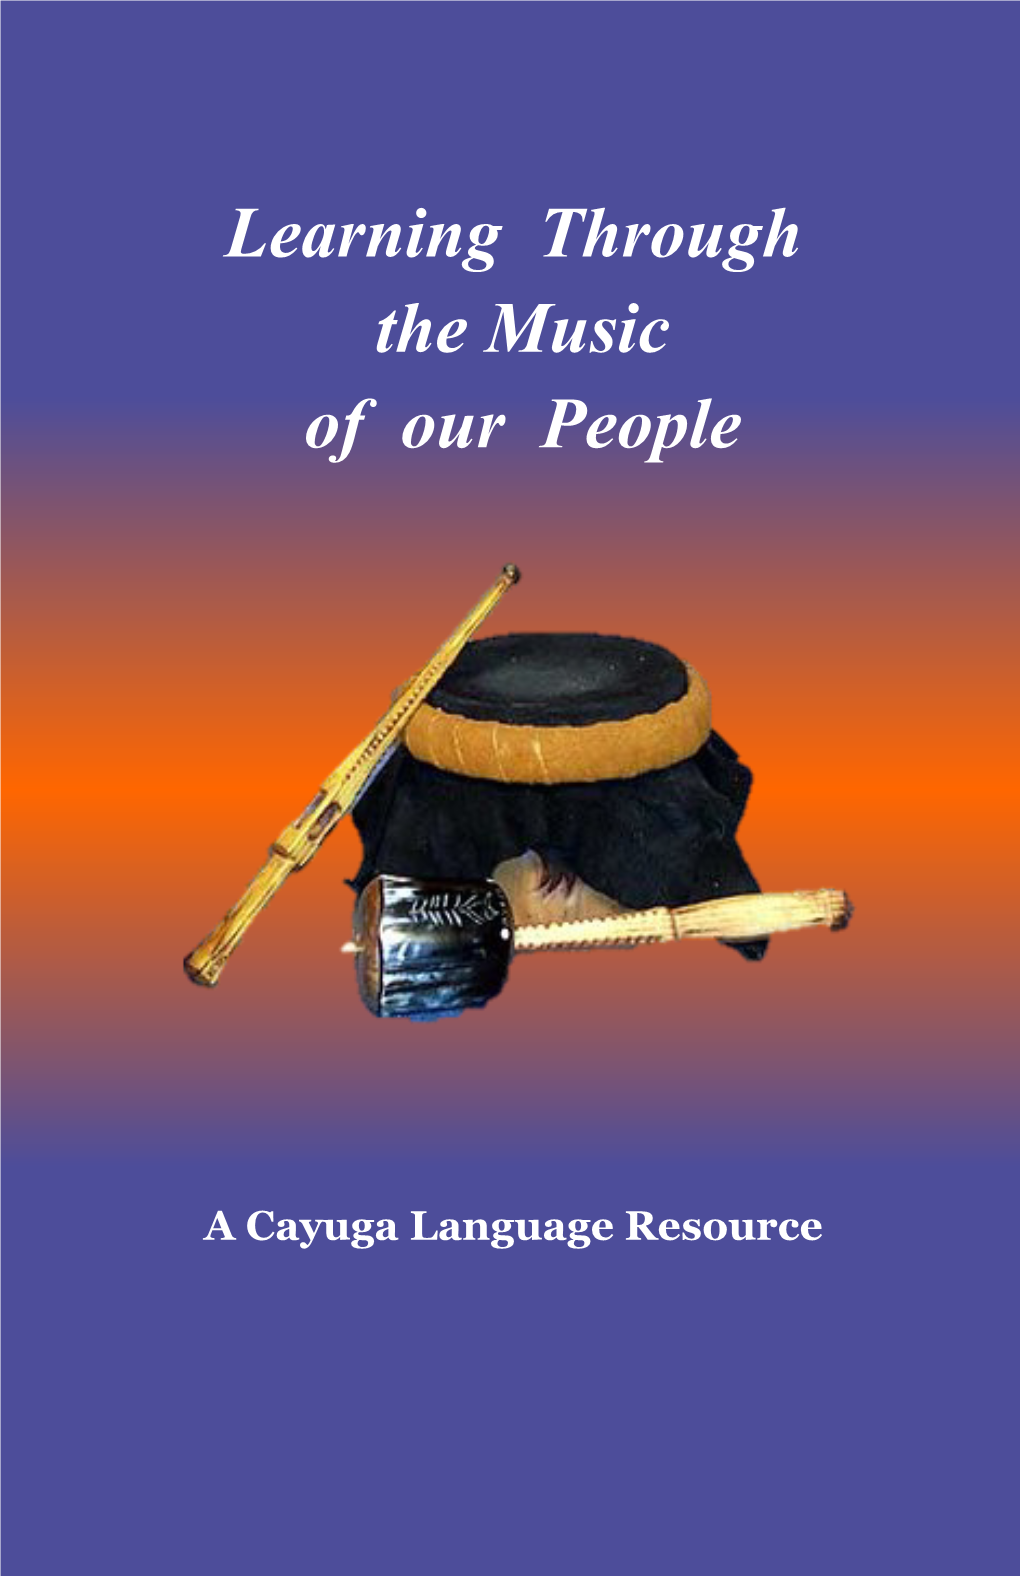 Cayuga Language Resource